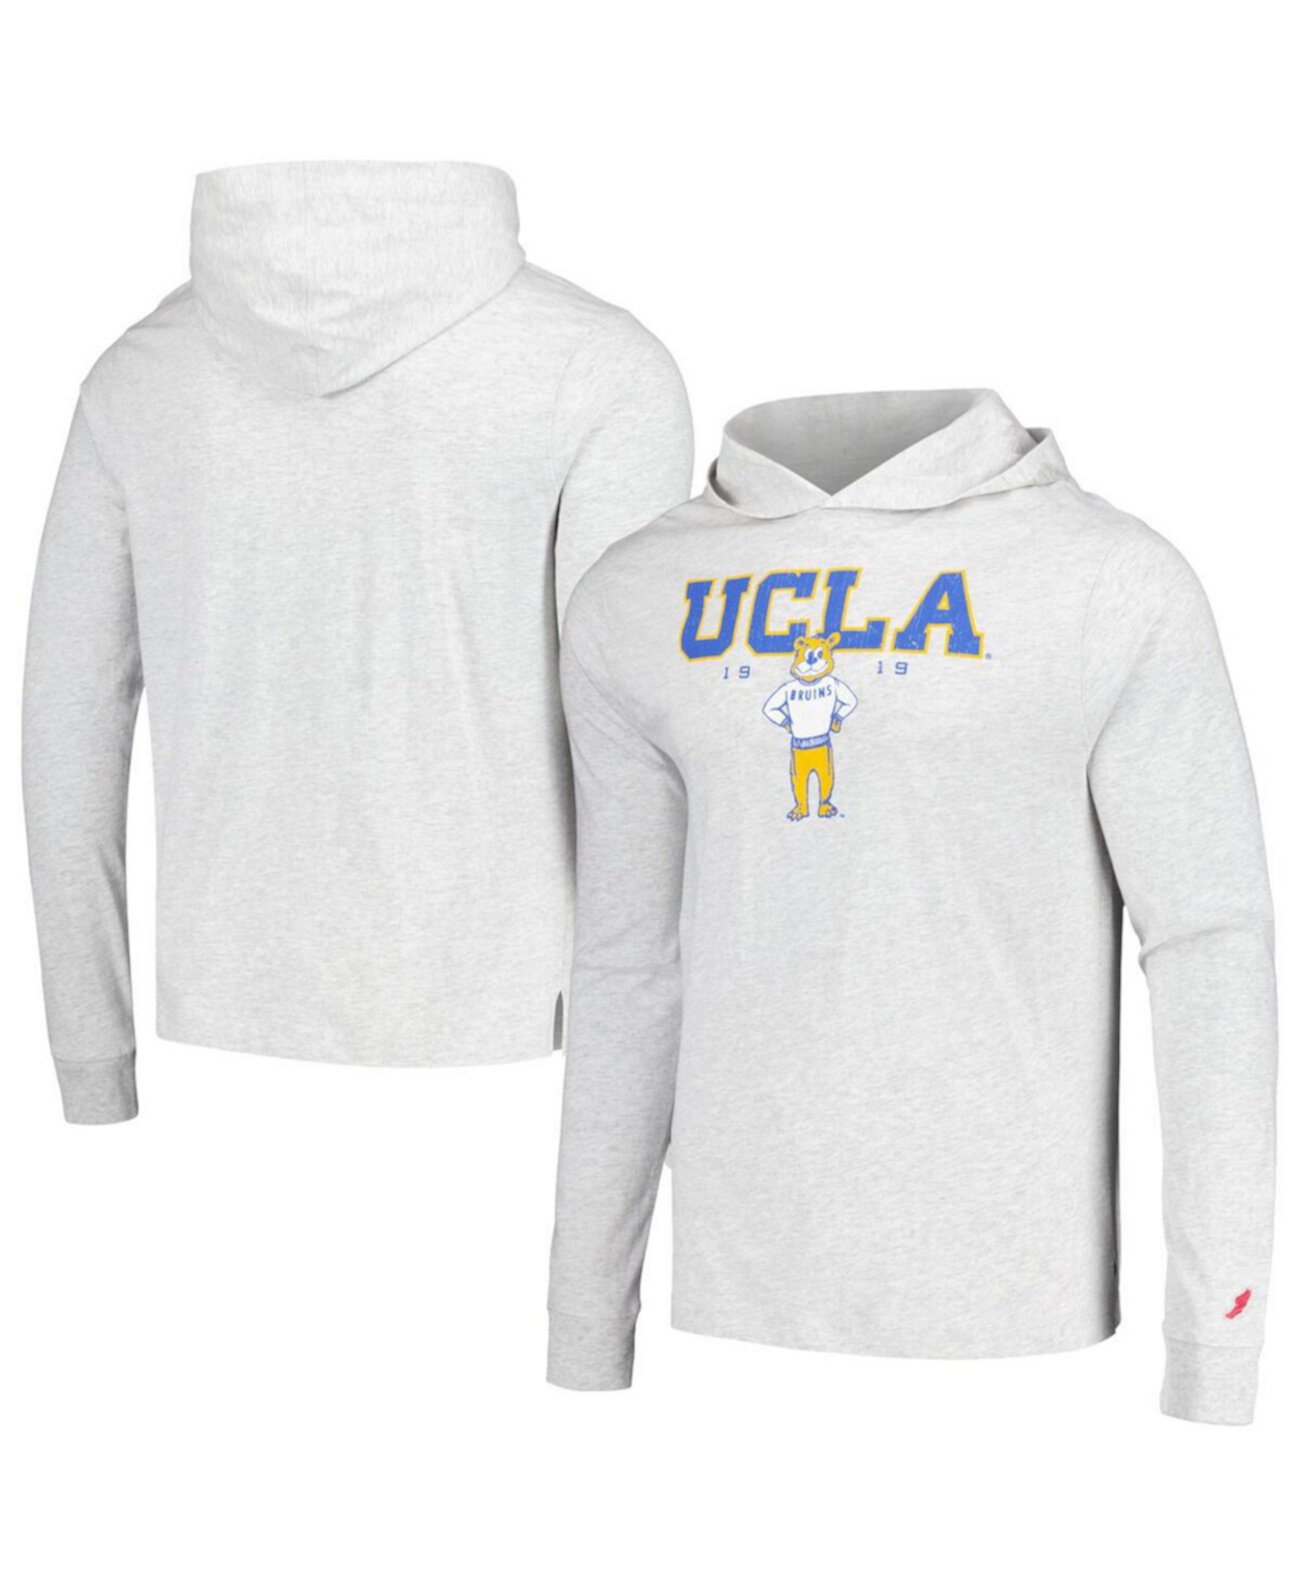 Мужская футболка с капюшоном и длинными рукавами Ash UCLA Bruins Team Stack Tumble League Collegiate Wear